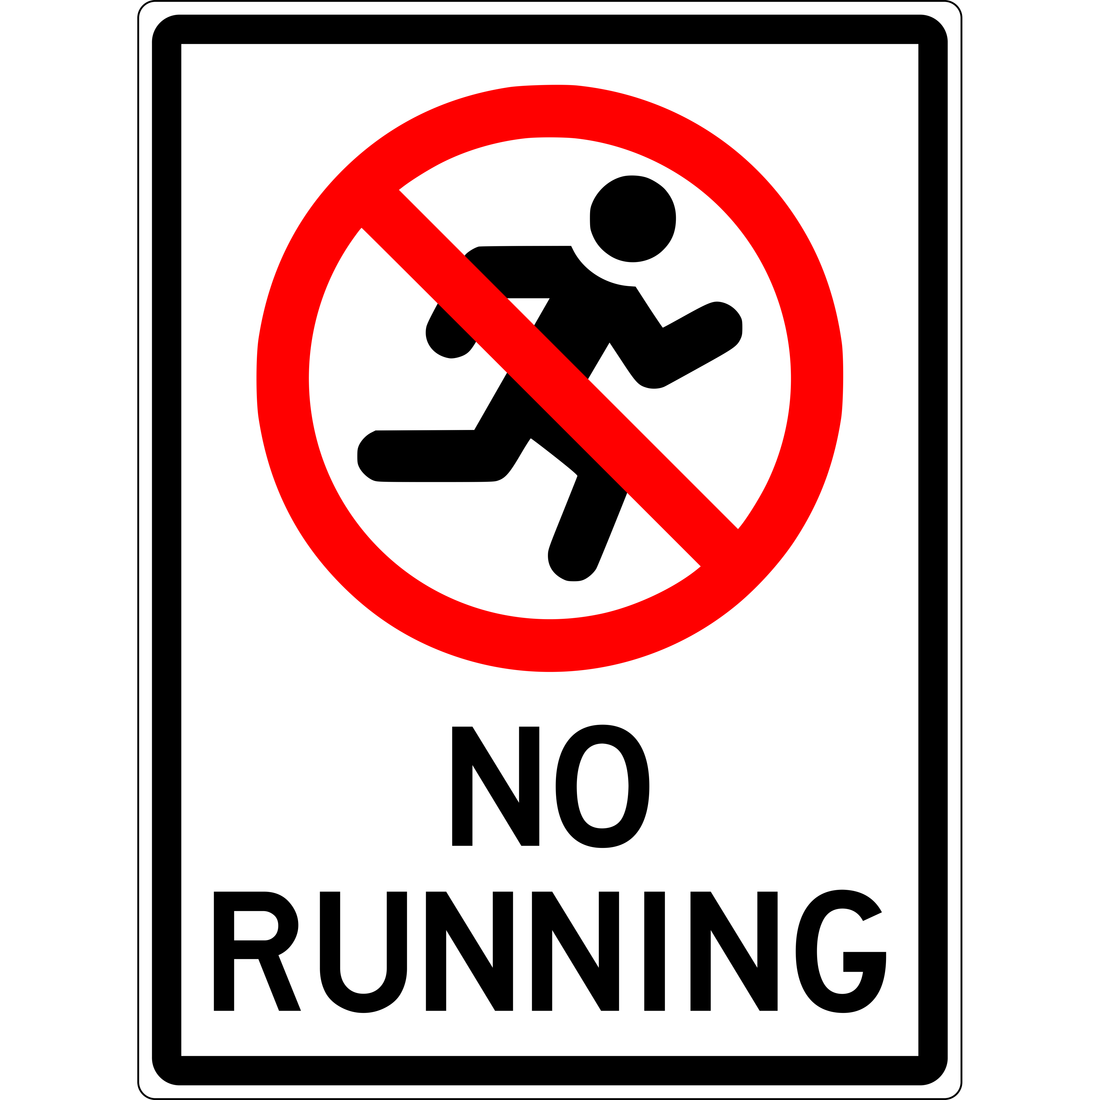 PROHIBITION - NO RUNNING